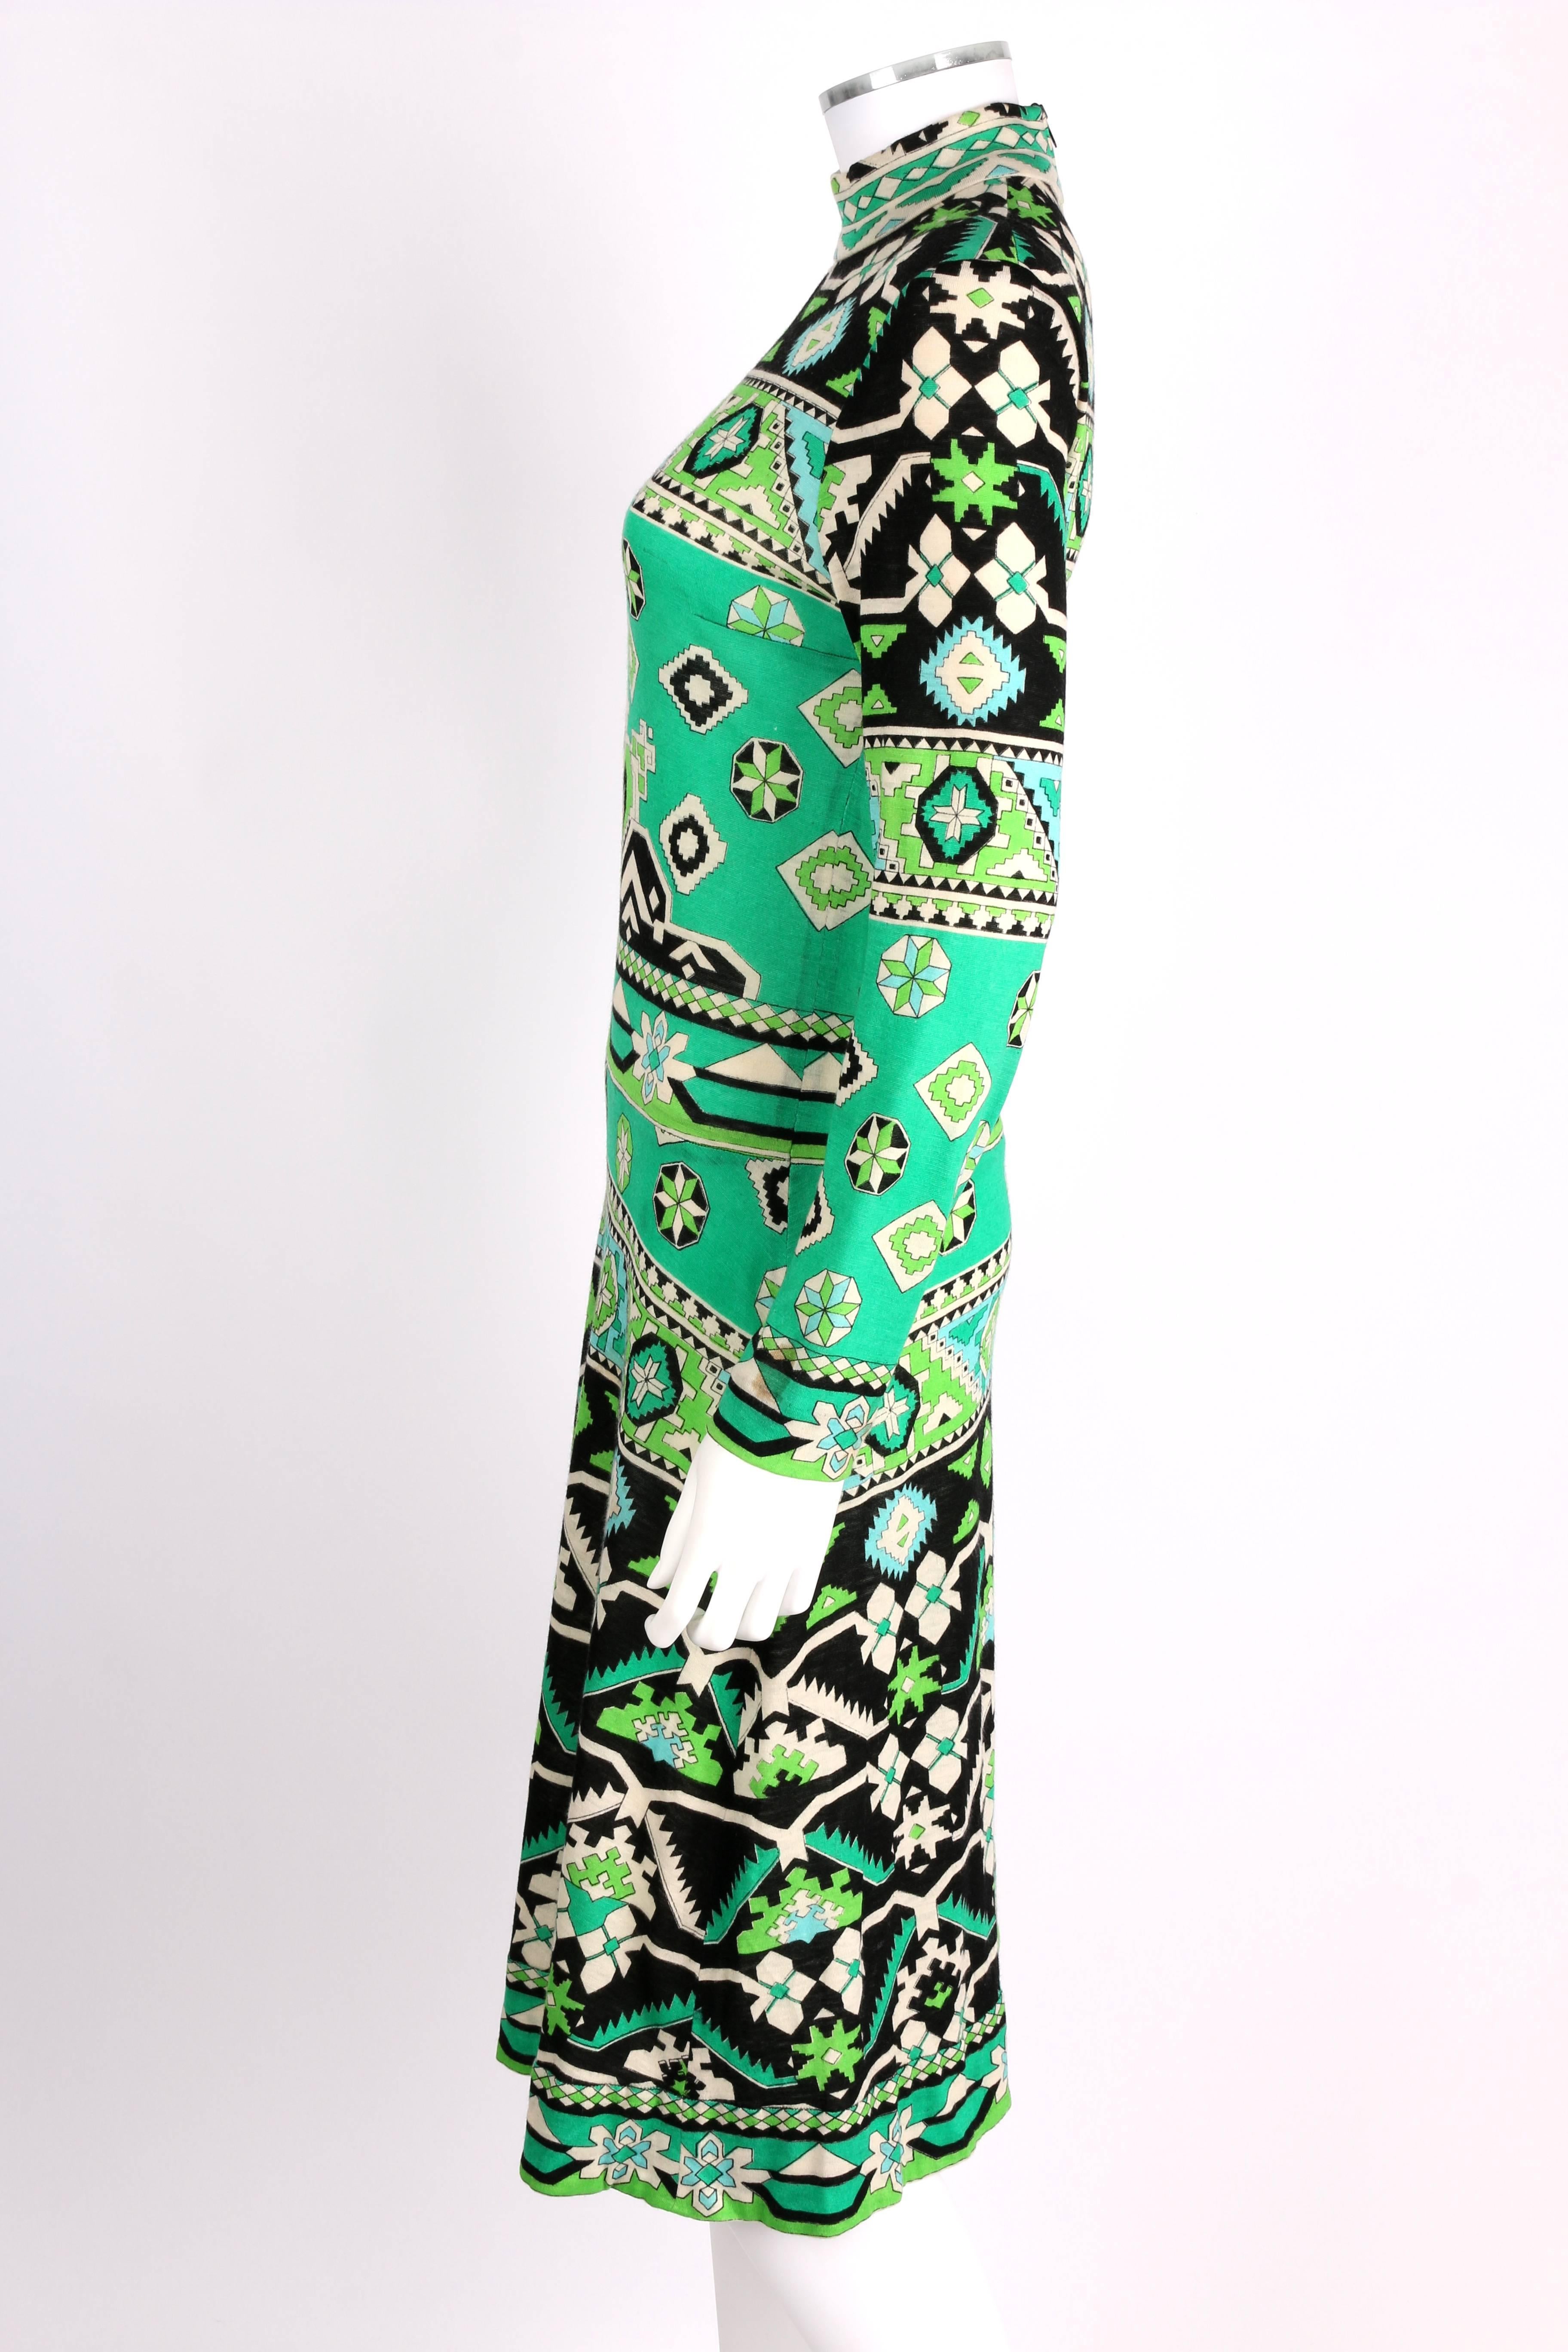 LEONARD PARIS 1960s Jade Green Tribal Floral Print Cashmere Jersey Knit Dress 1